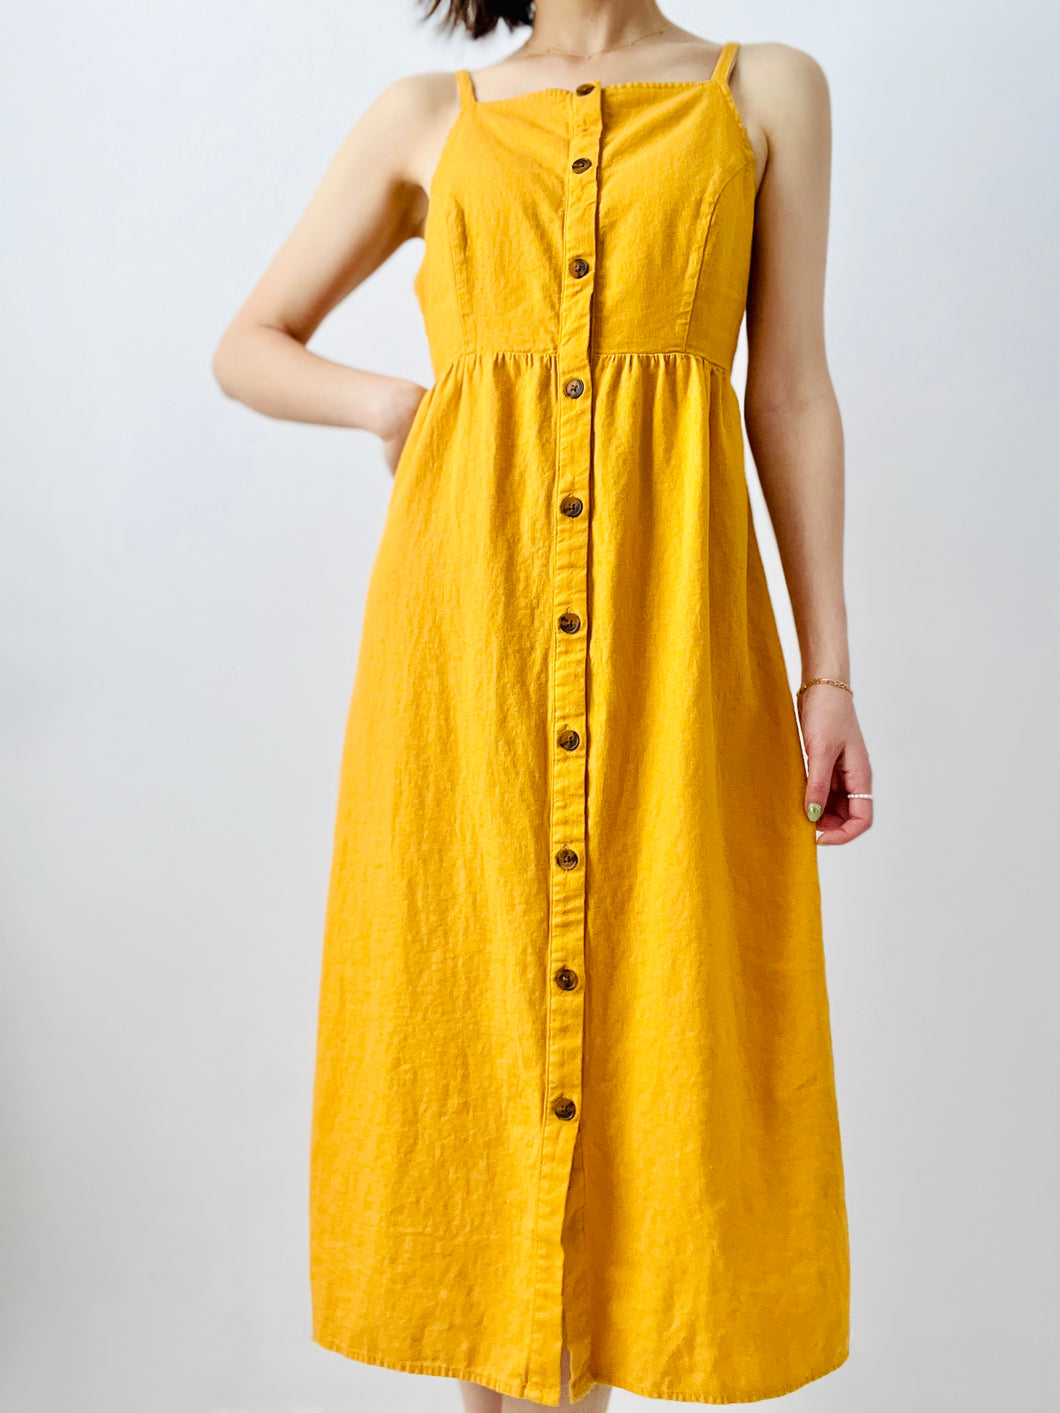 Mustard color linen dress